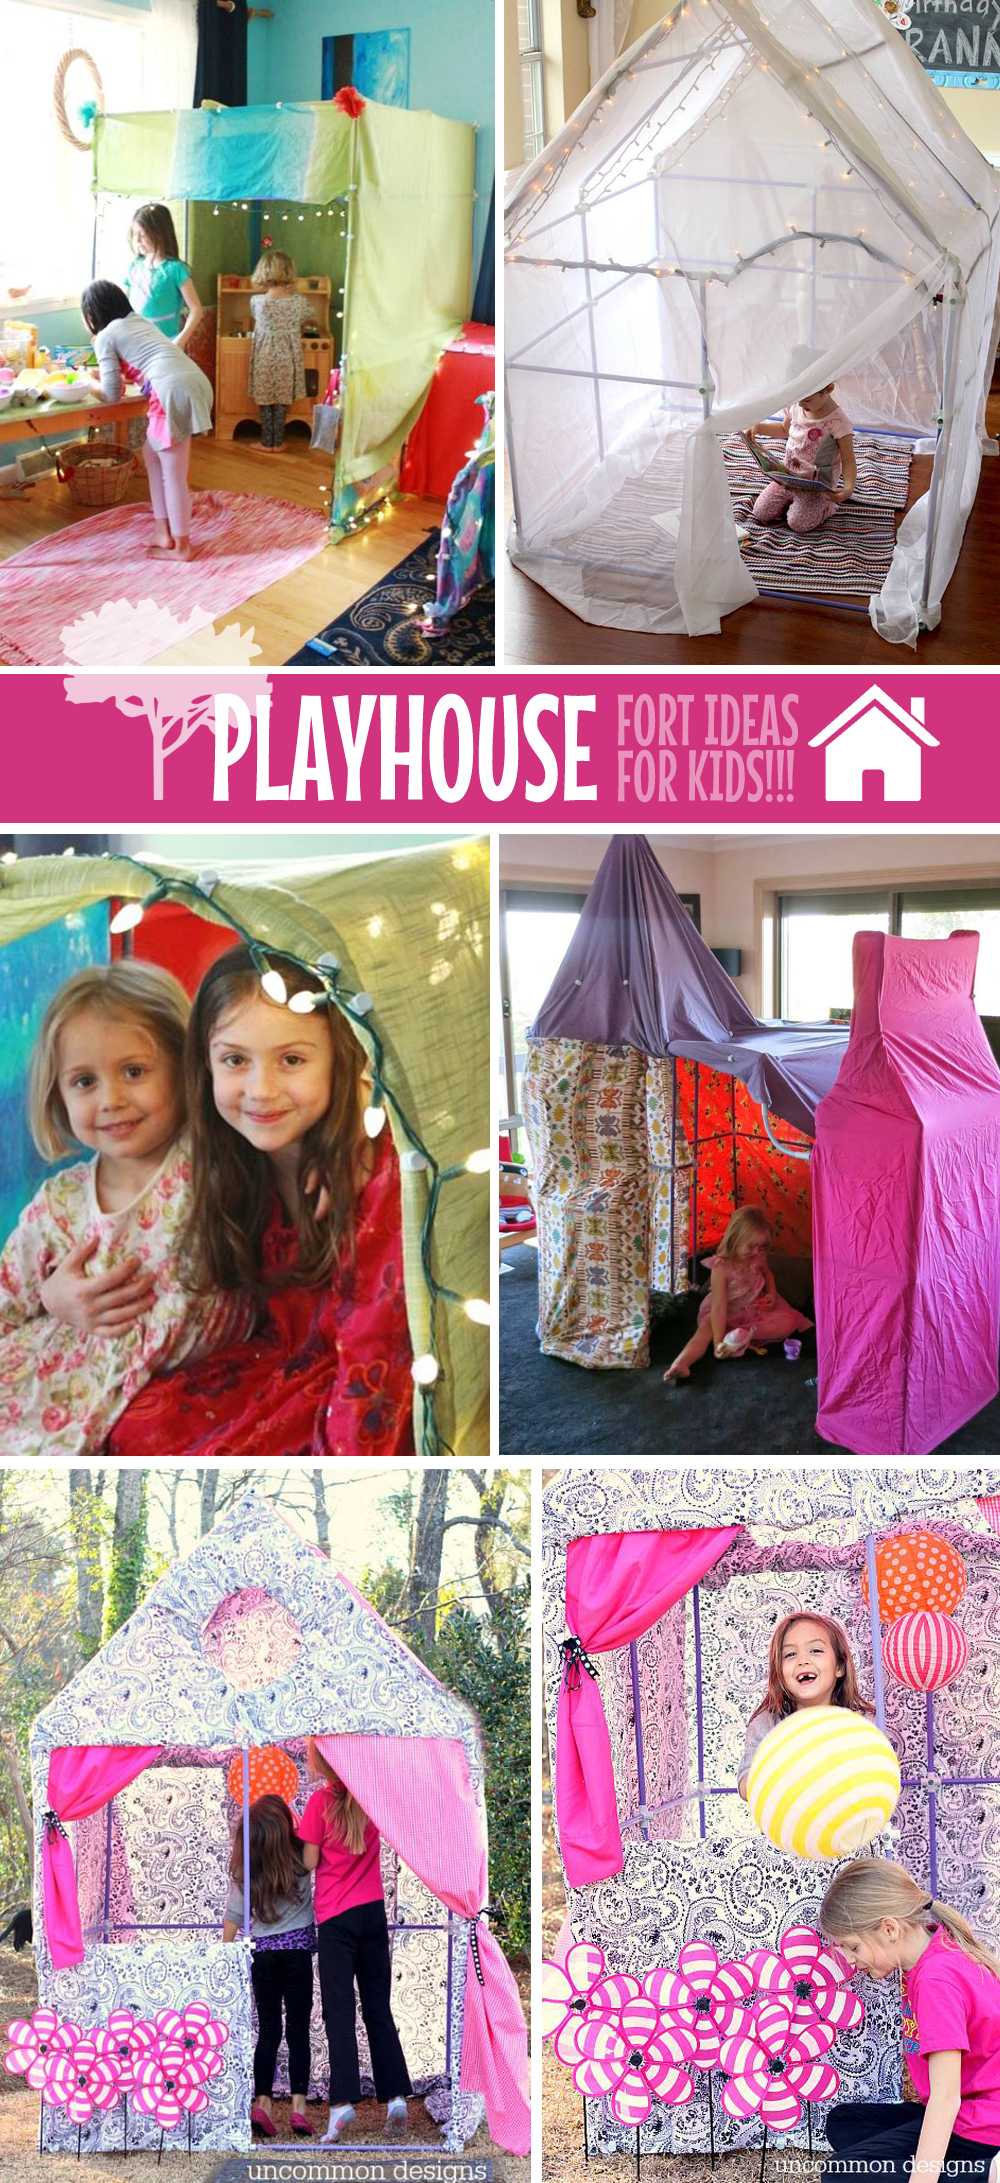 Playhouse Fort Ideas - Pinterest